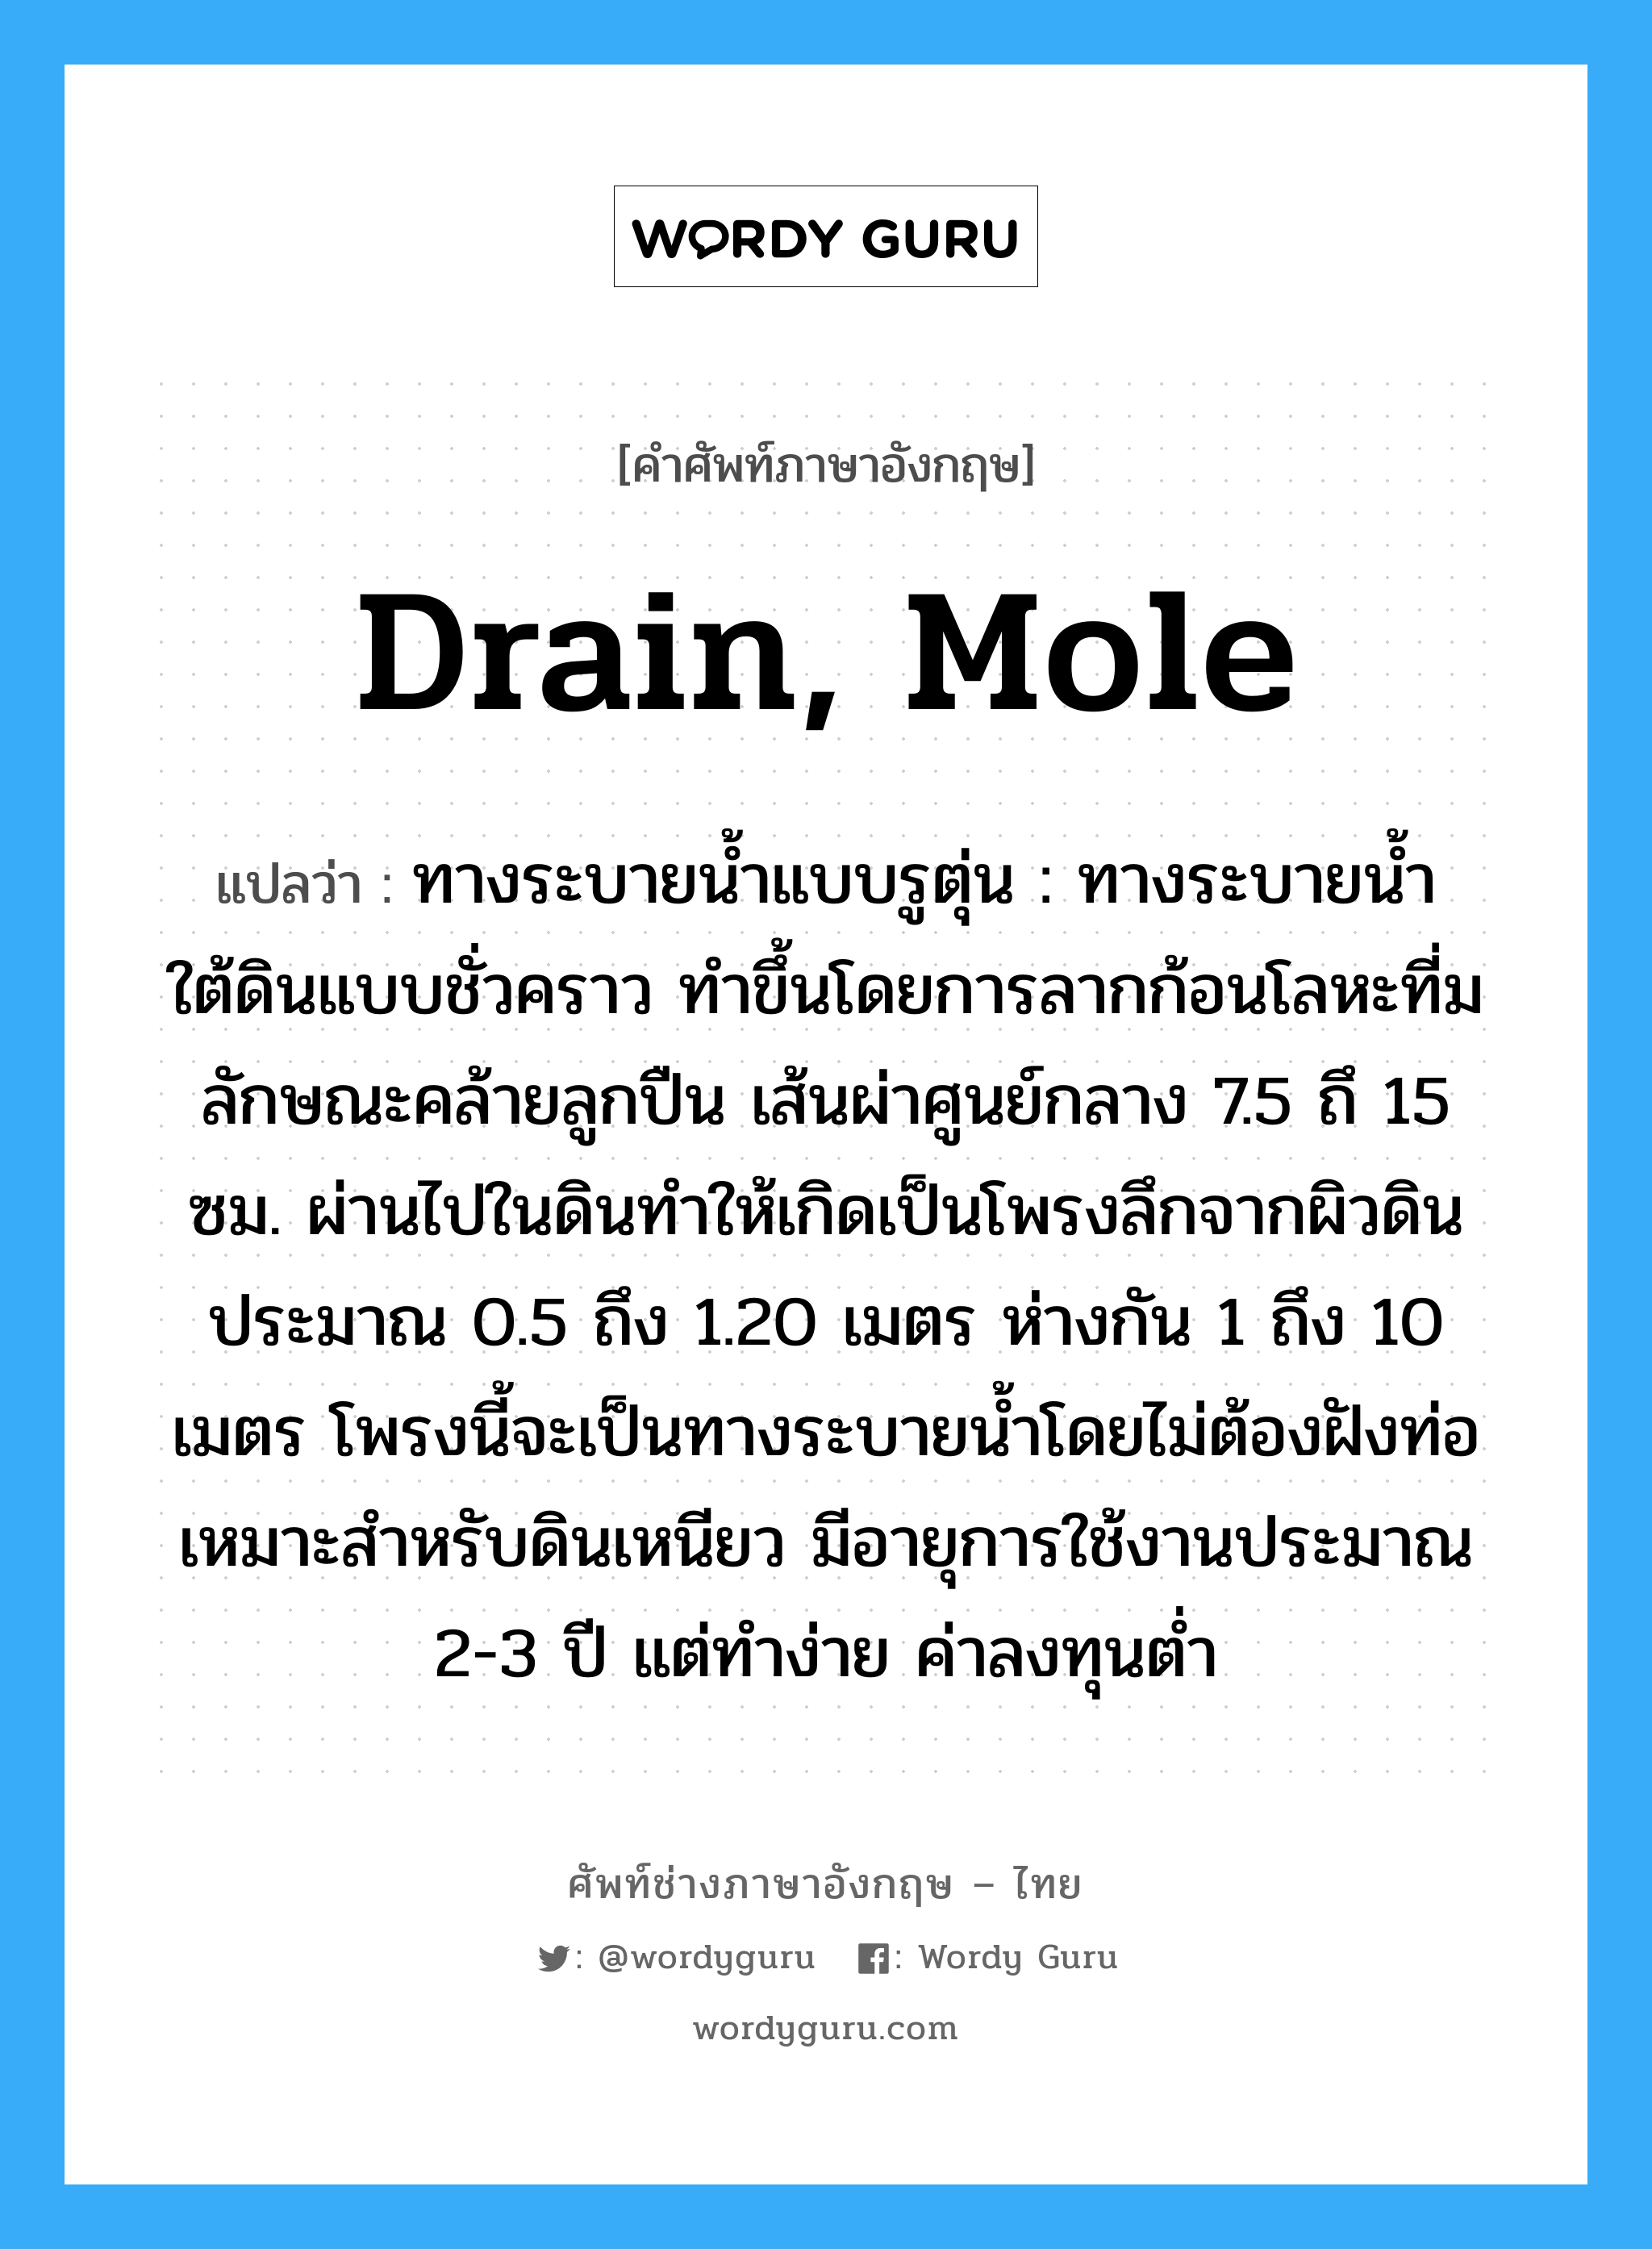 drain, mole แปลว่า?, คำศัพท์ช่างภาษาอังกฤษ - ไทย drain, mole คำศัพท์ภาษาอังกฤษ drain, mole แปลว่า ทางระบายน้ำแบบรูตุ่น : ทางระบายน้ำใต้ดินแบบชั่วคราว ทำขึ้นโดยการลากก้อนโลหะที่ม ลักษณะคล้ายลูกปืน เส้นผ่าศูนย์กลาง 7.5 ถึ 15 ซม. ผ่านไปในดินทำให้เกิดเป็นโพรงลึกจากผิวดินประมาณ 0.5 ถึง 1.20 เมตร ห่างกัน 1 ถึง 10 เมตร โพรงนี้จะเป็นทางระบายน้ำโดยไม่ต้องฝังท่อ เหมาะสำหรับดินเหนียว มีอายุการใช้งานประมาณ 2-3 ปี แต่ทำง่าย ค่าลงทุนต่ำ